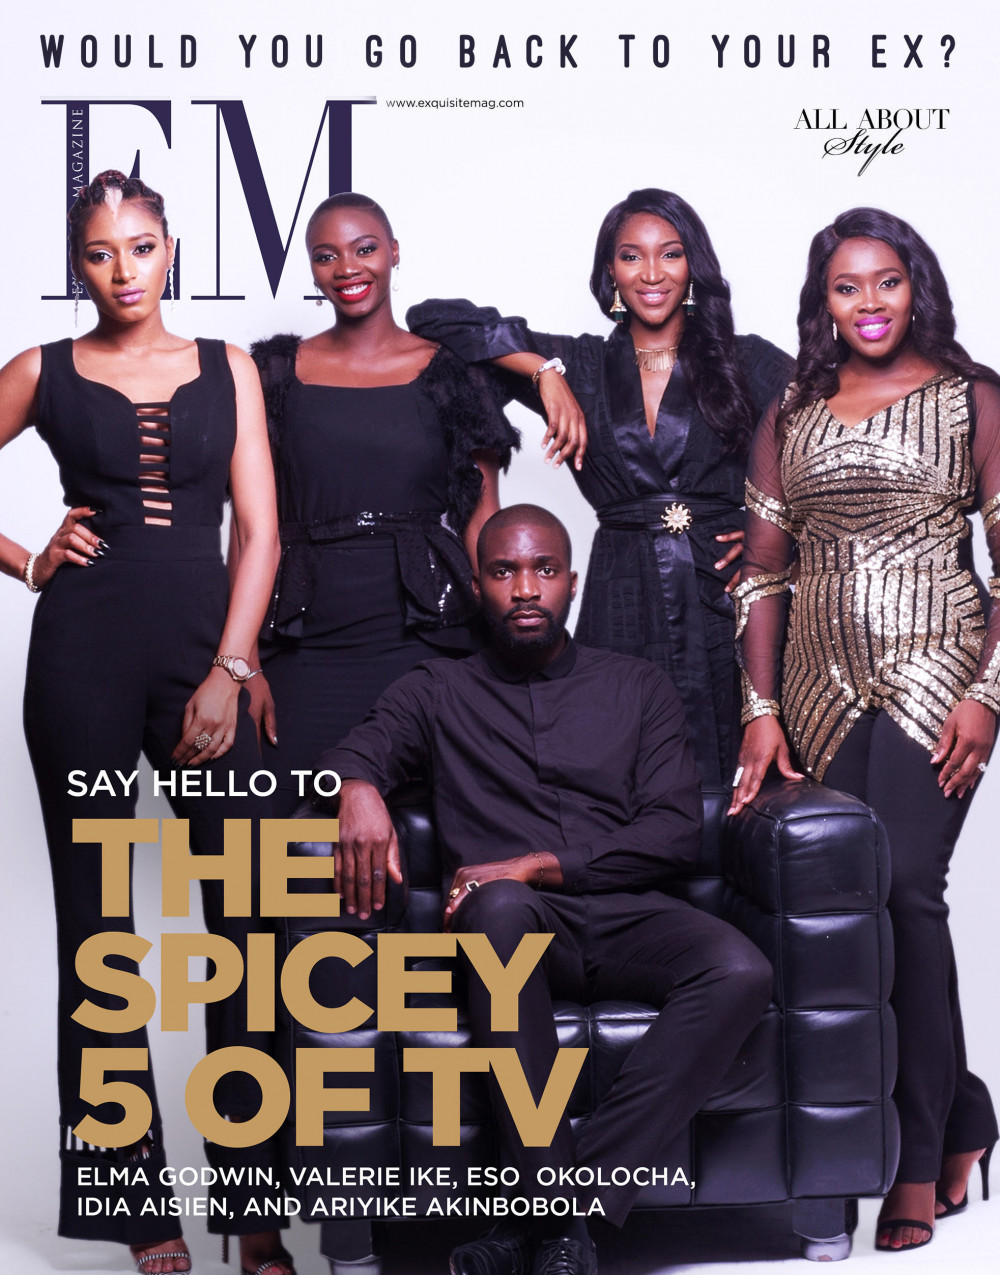 Spice TV Presenters "The Spicey Five of TV" Cover Exquisite Magazine's  Latest Issue | BellaNaija